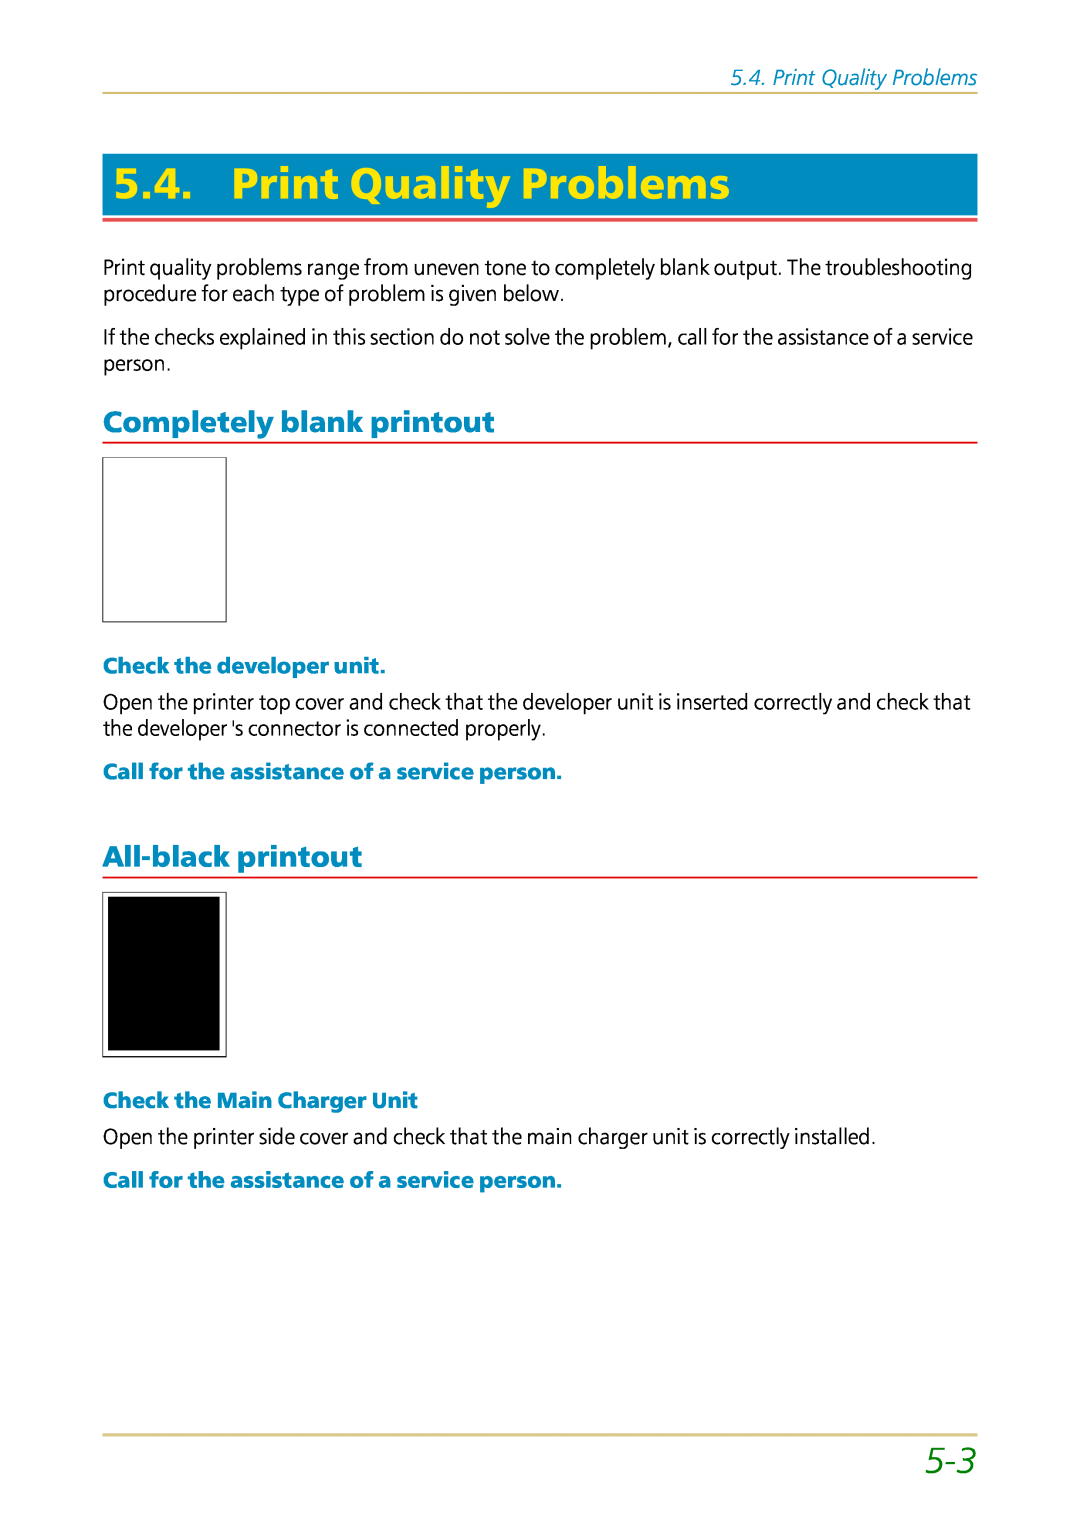 Kyocera FS-1700 user manual Print Quality Problems, Completely blank printout, All-blackprintout, Check the developer unit 